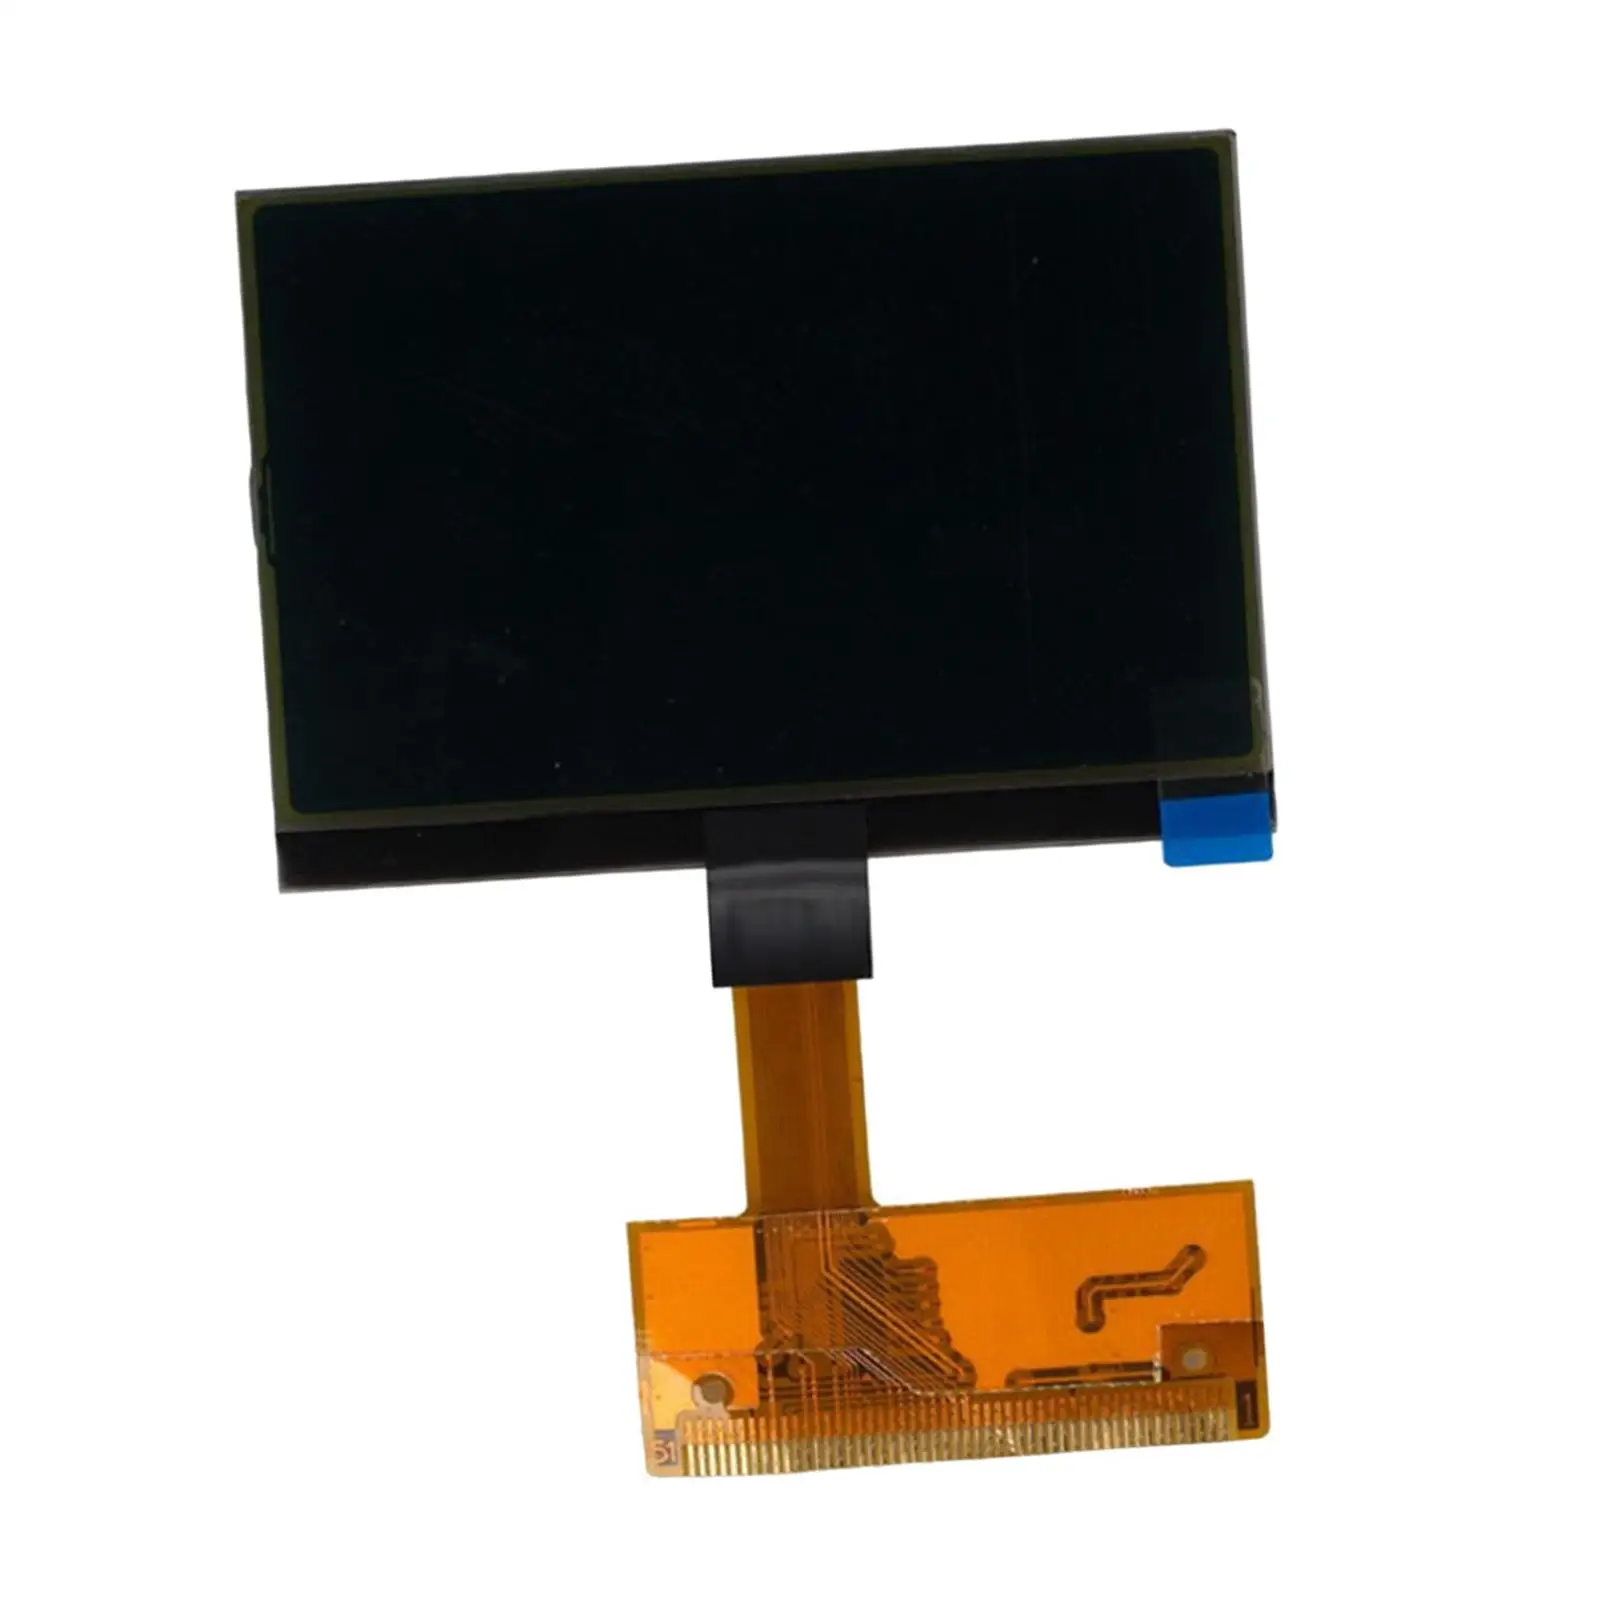 Car LCD Screen, Monitor Display Dashboard Repair Fits for Audi S3 8L Series 99-03 Parts Replace